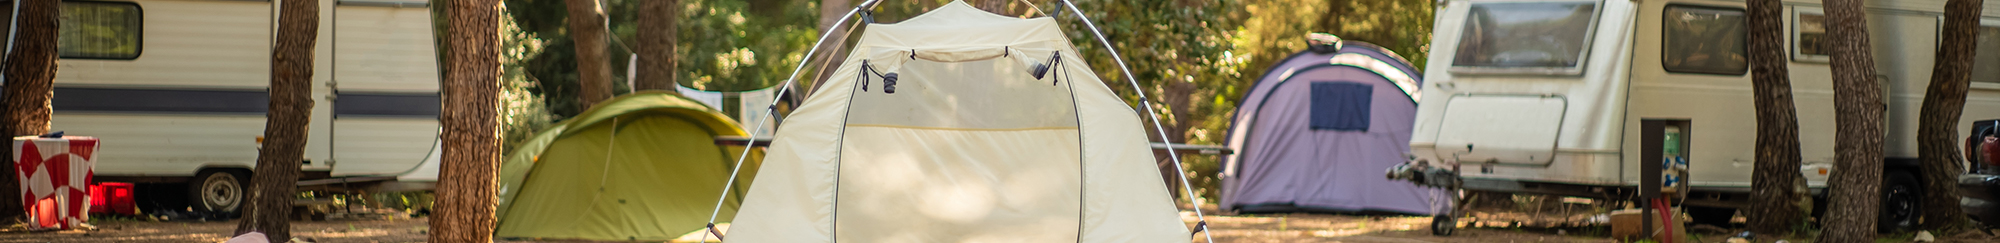 canvas tent repair kit tape patch mesh